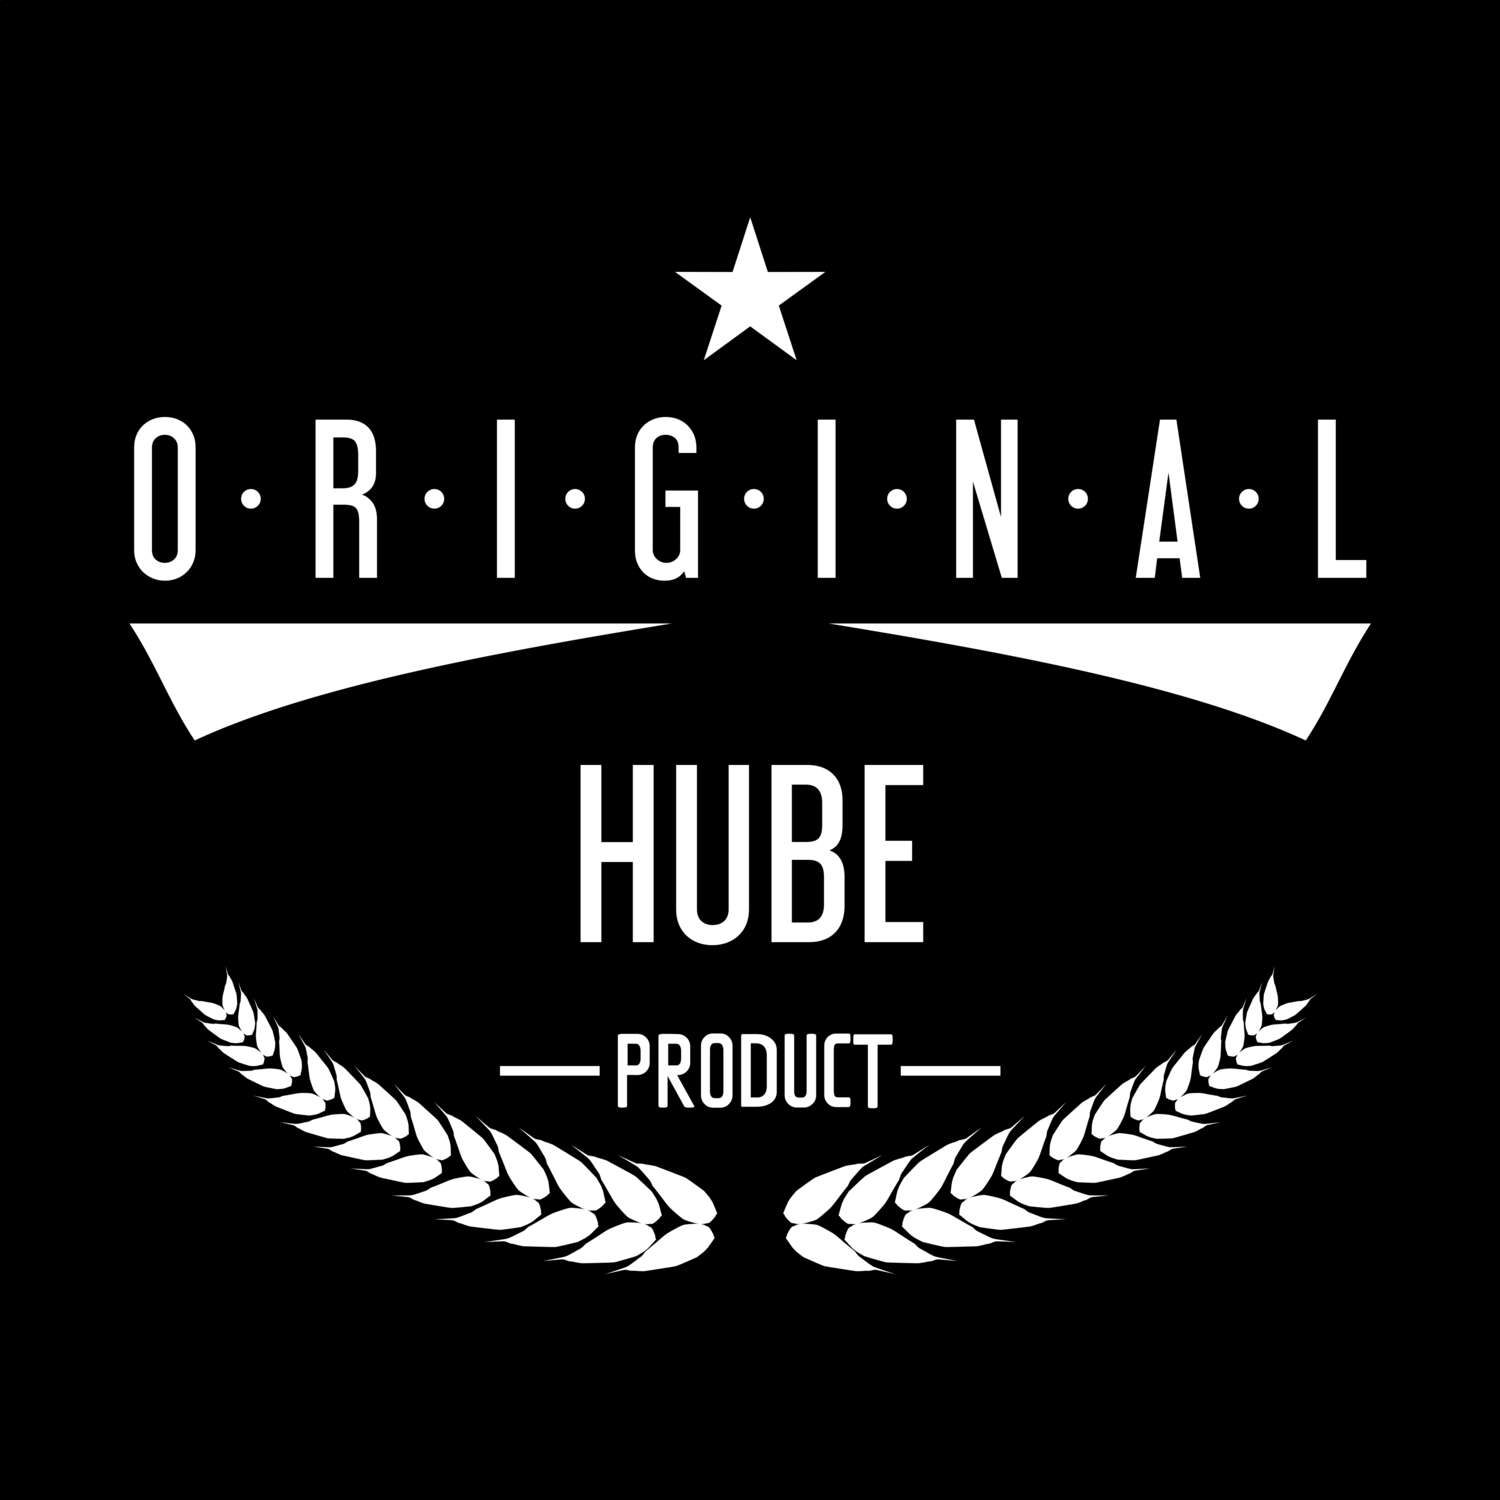 Hube T-Shirt »Original Product«